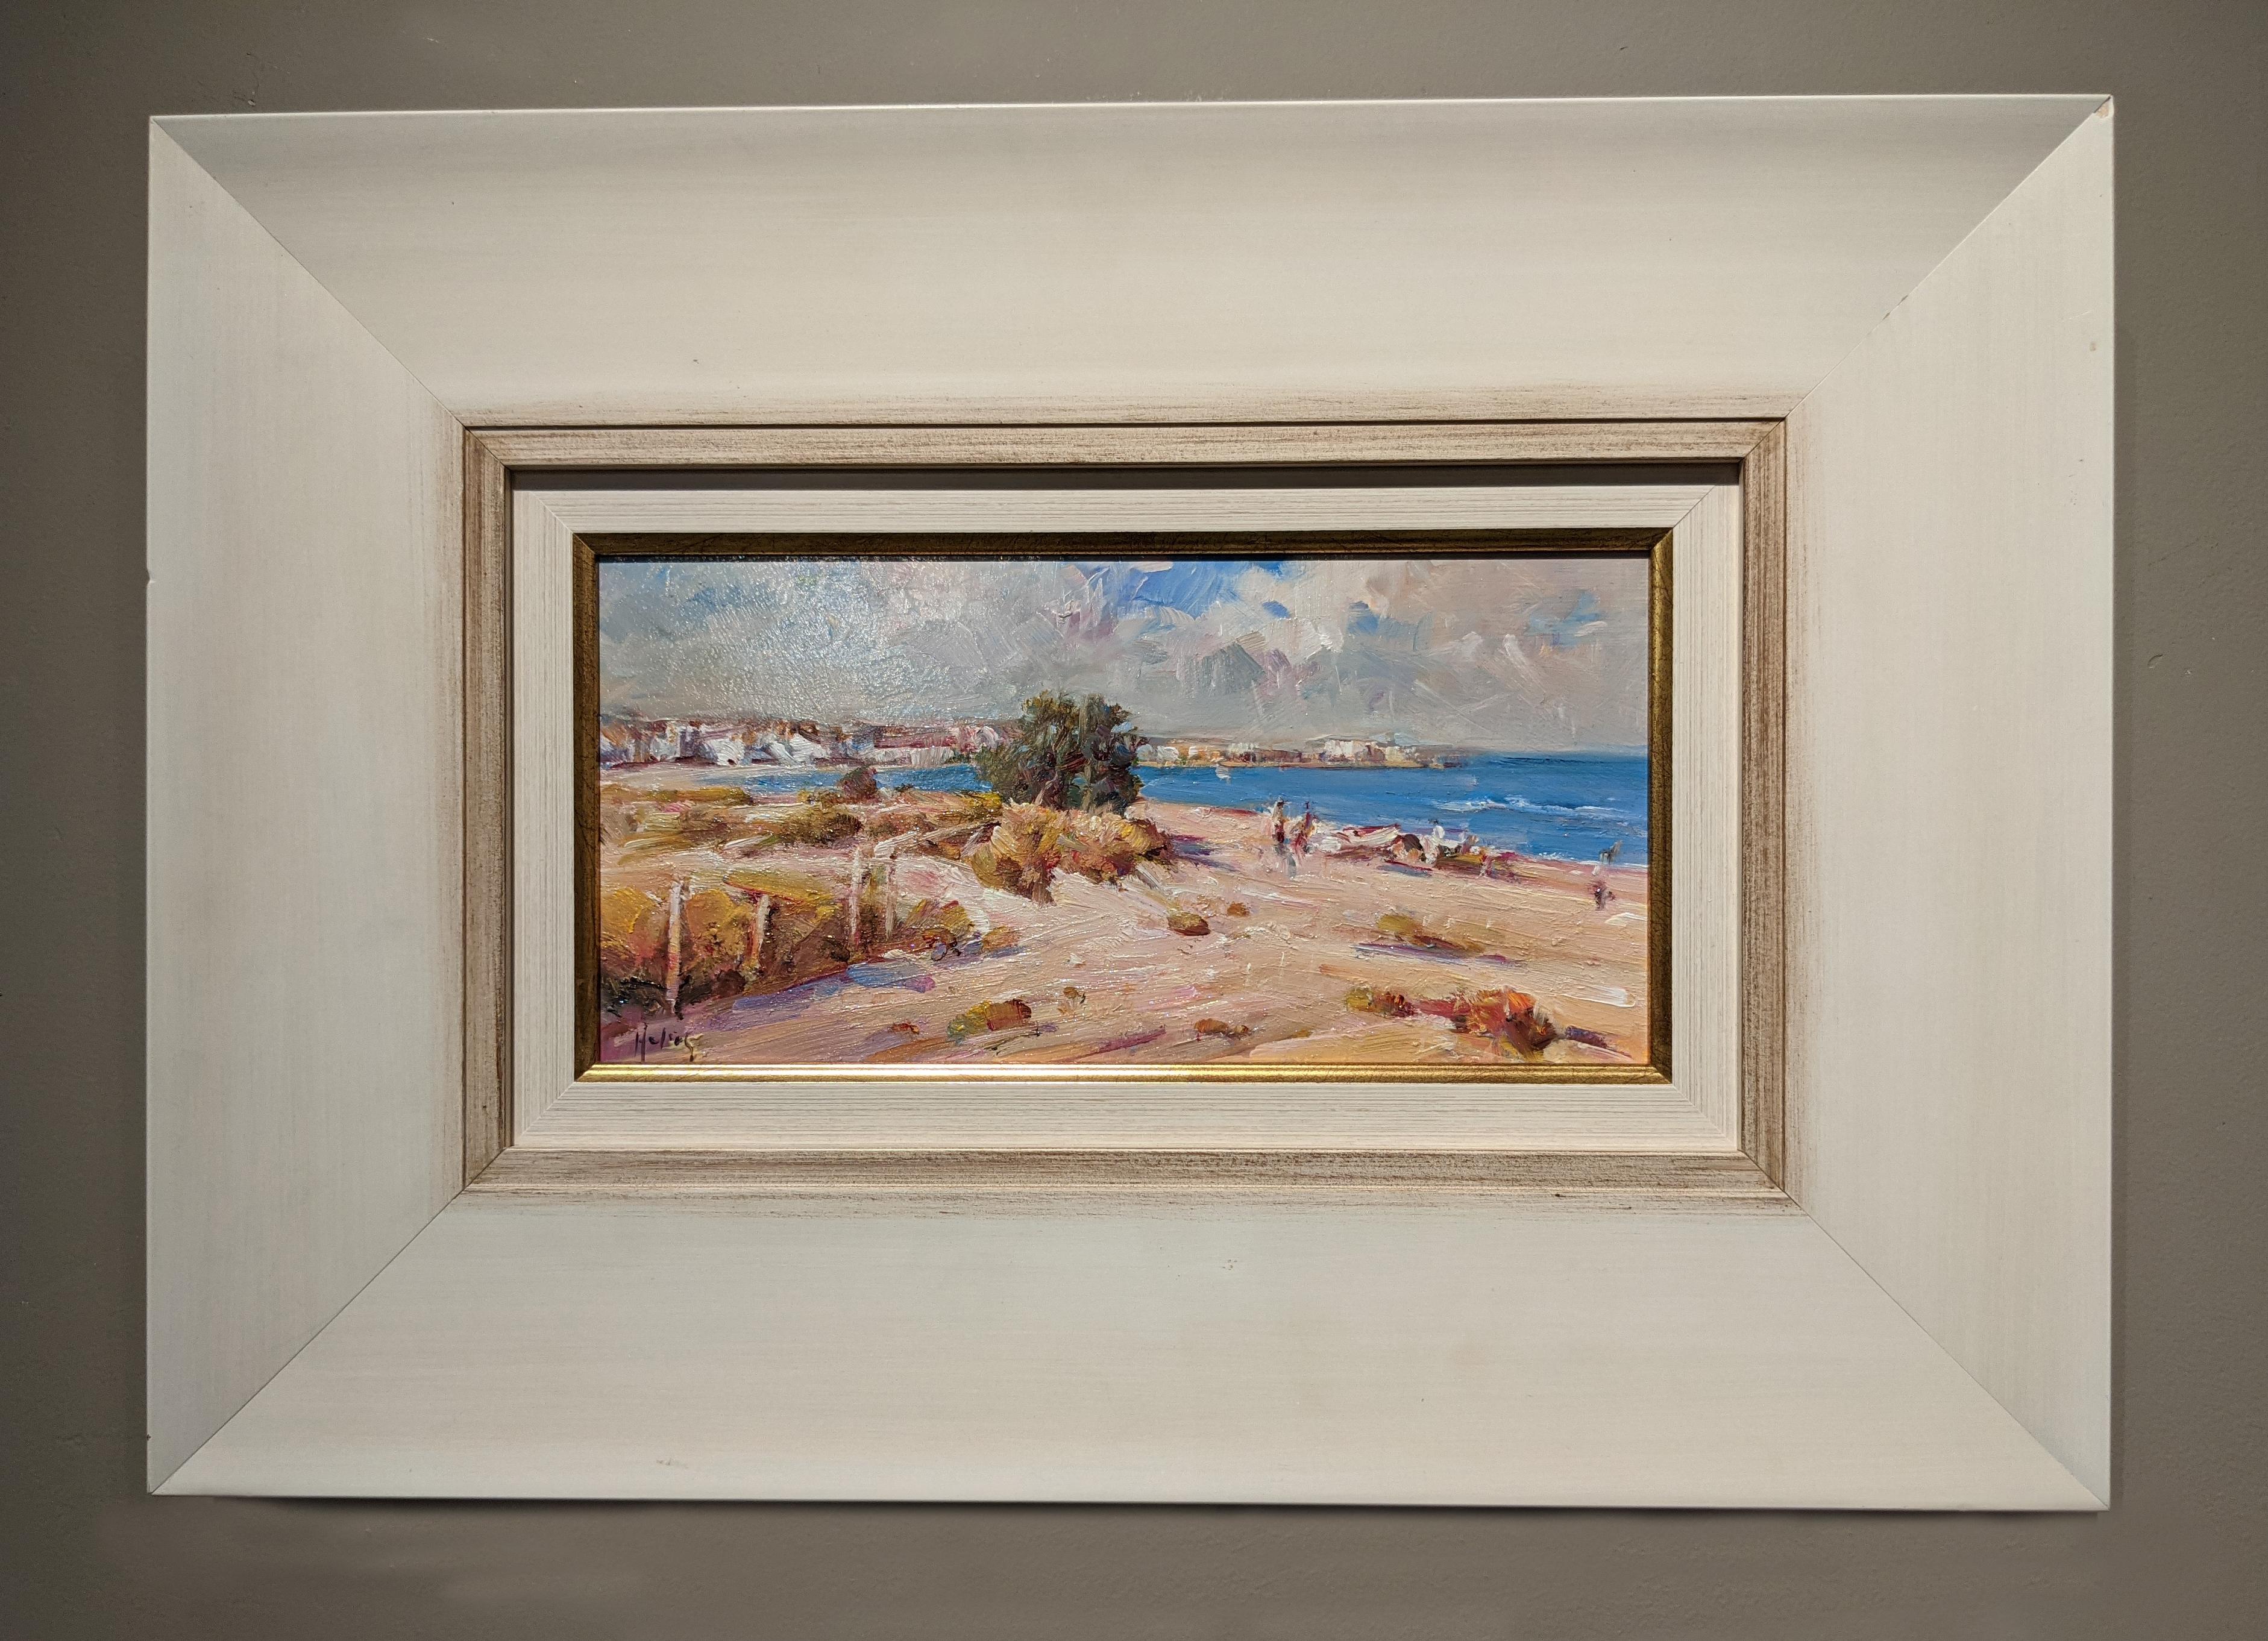 Helios Gisbert Figurative Painting - 'Sand Dunes' Contemporary Landscape Painting of sea, sand, sky, figures & hills